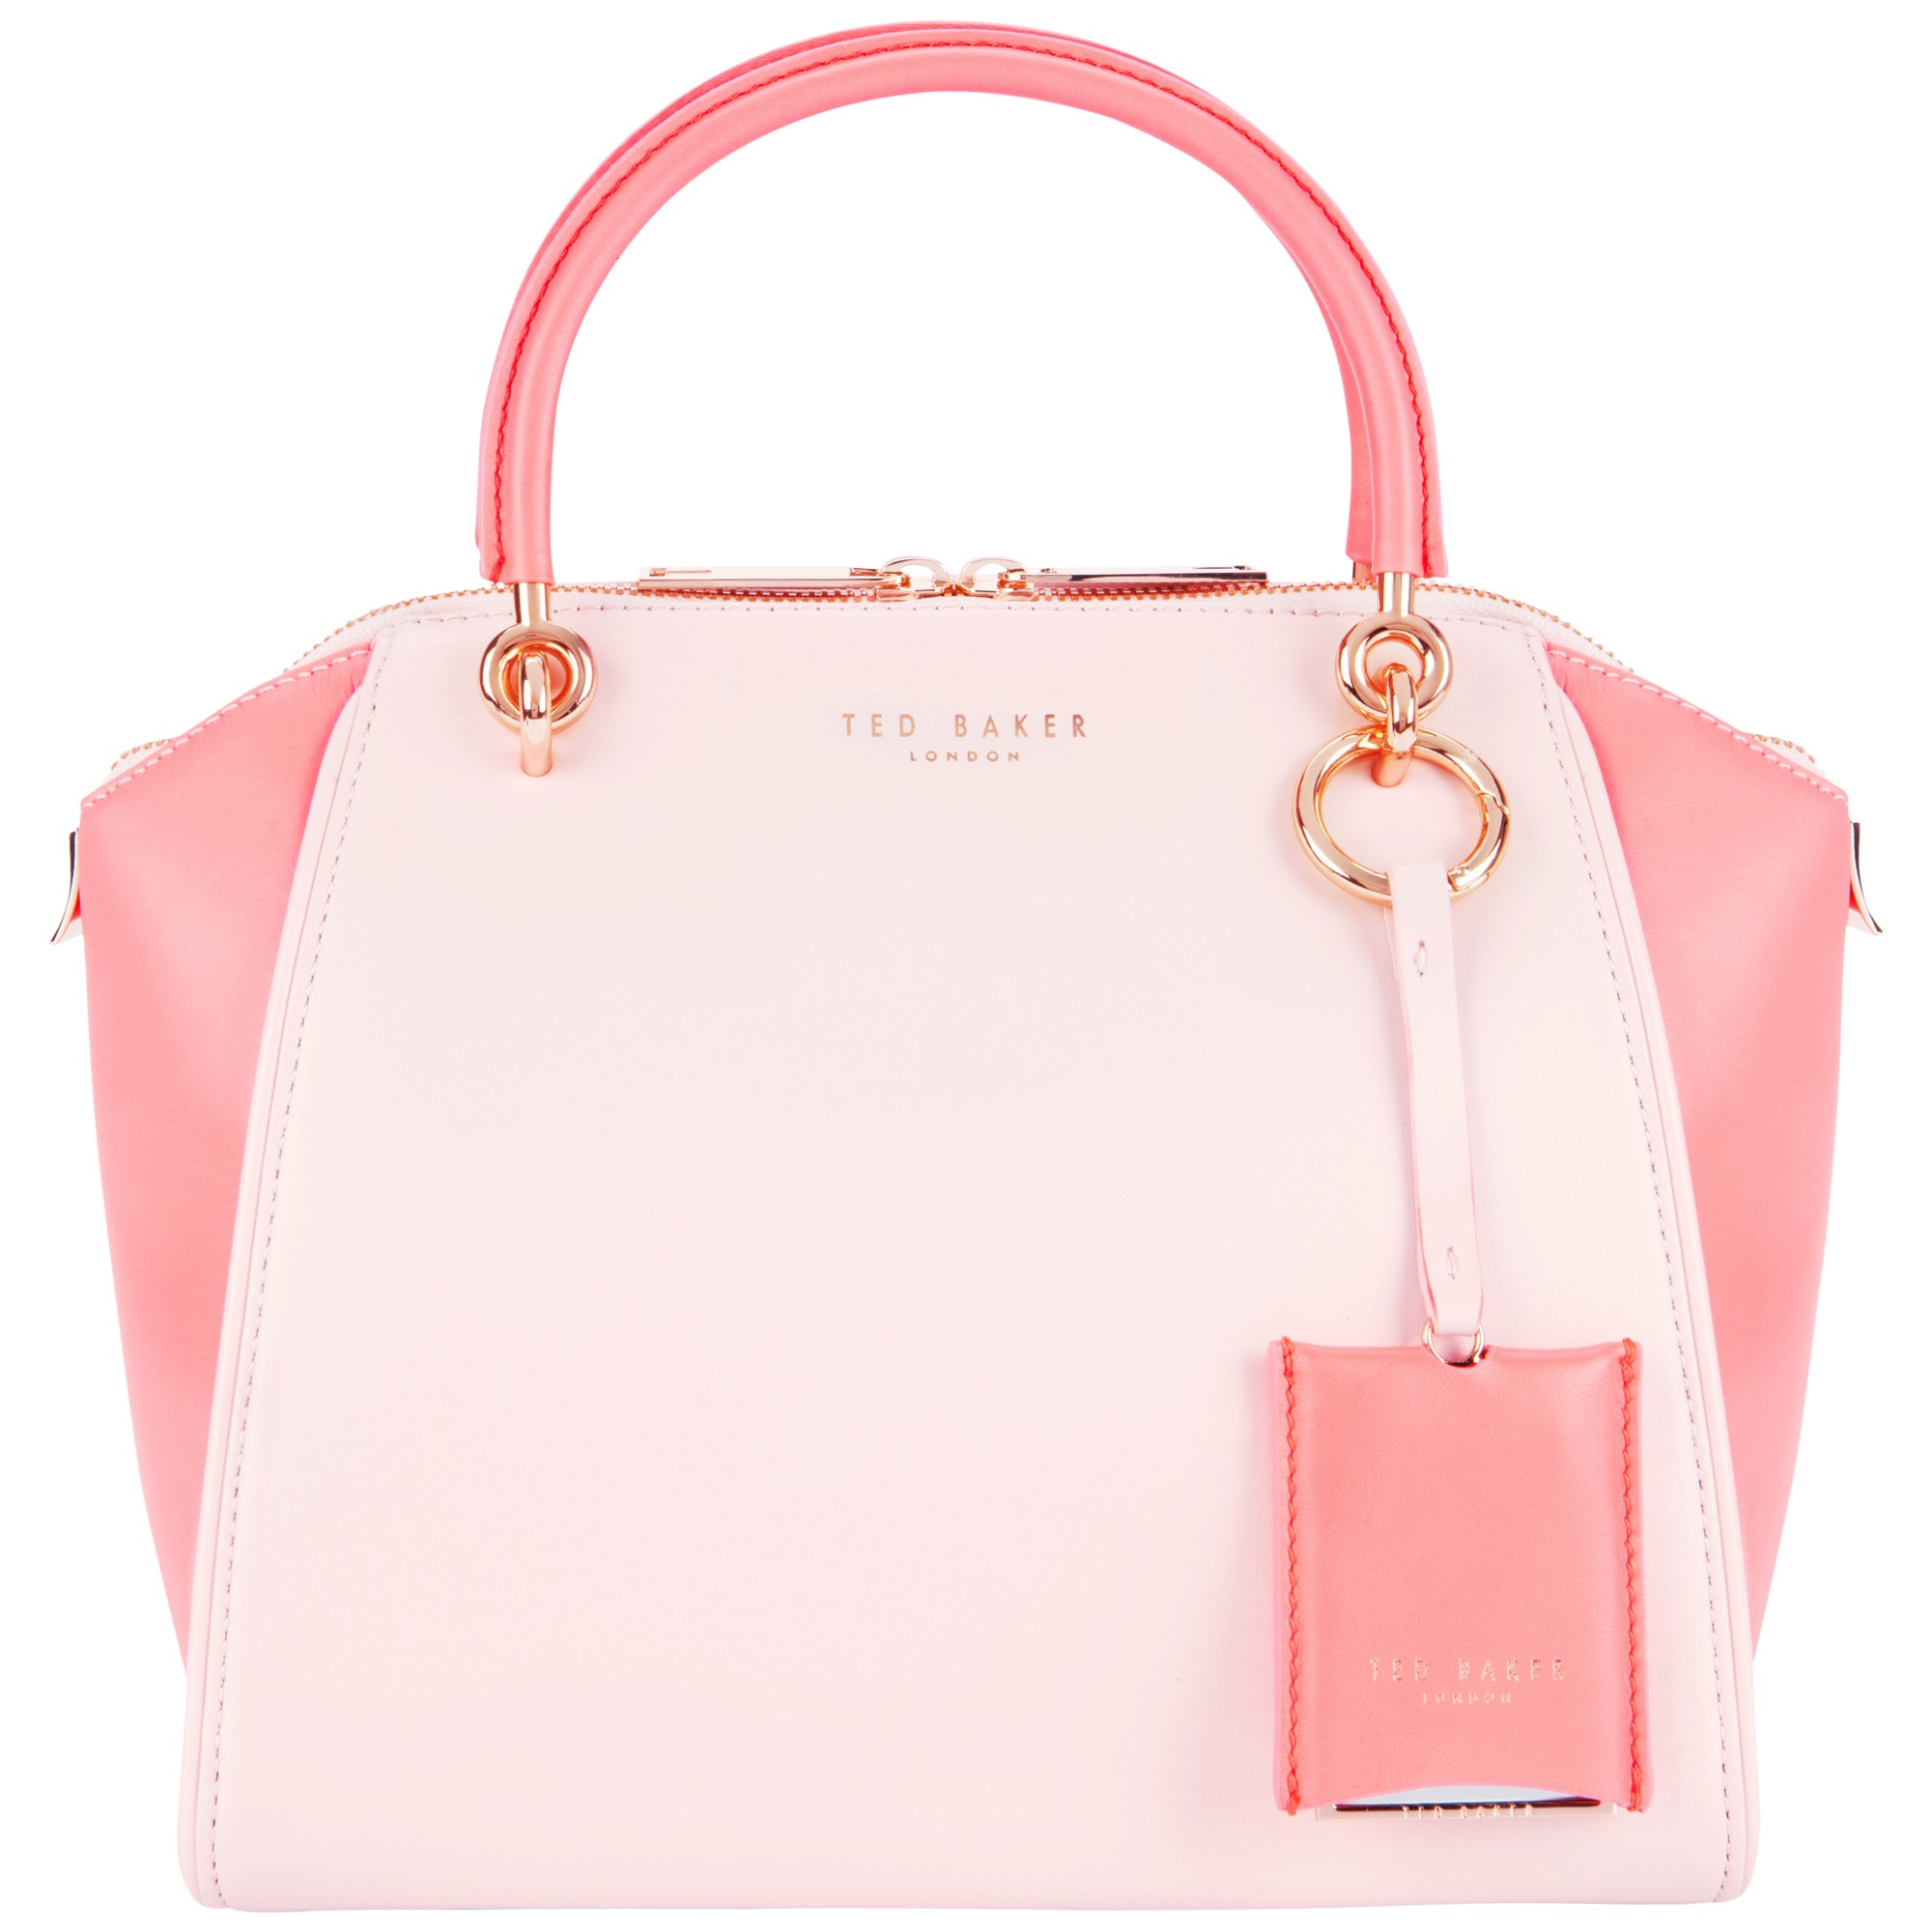 Ted Baker Merells Leather Tote Handbag in Pink (Light Pink) | Lyst